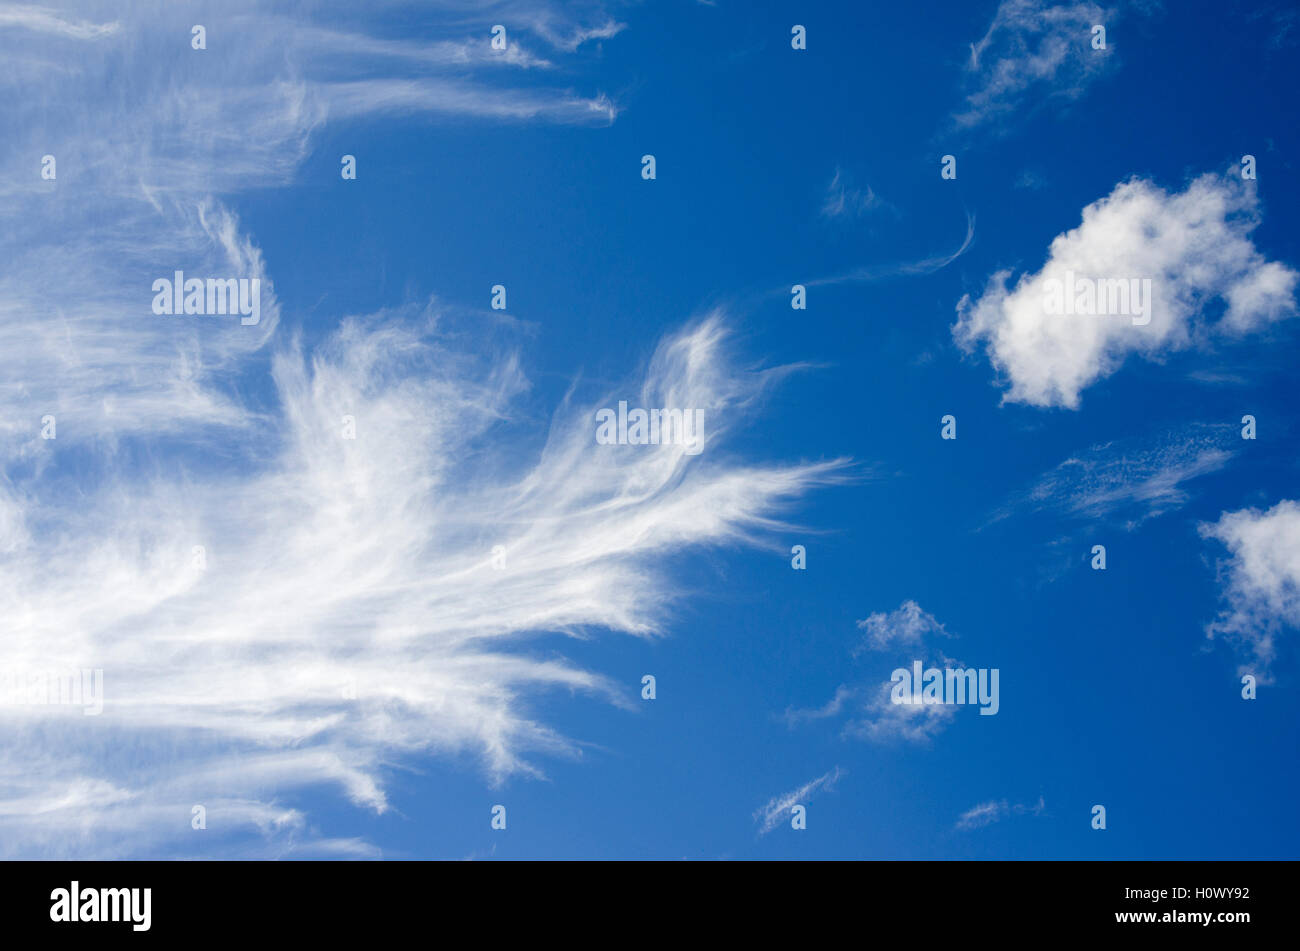 Bellissimo cielo blu con nuvole wispy, estate cielo. Bella nuvole, lana cotone nuvole. Sognante, Foto Stock